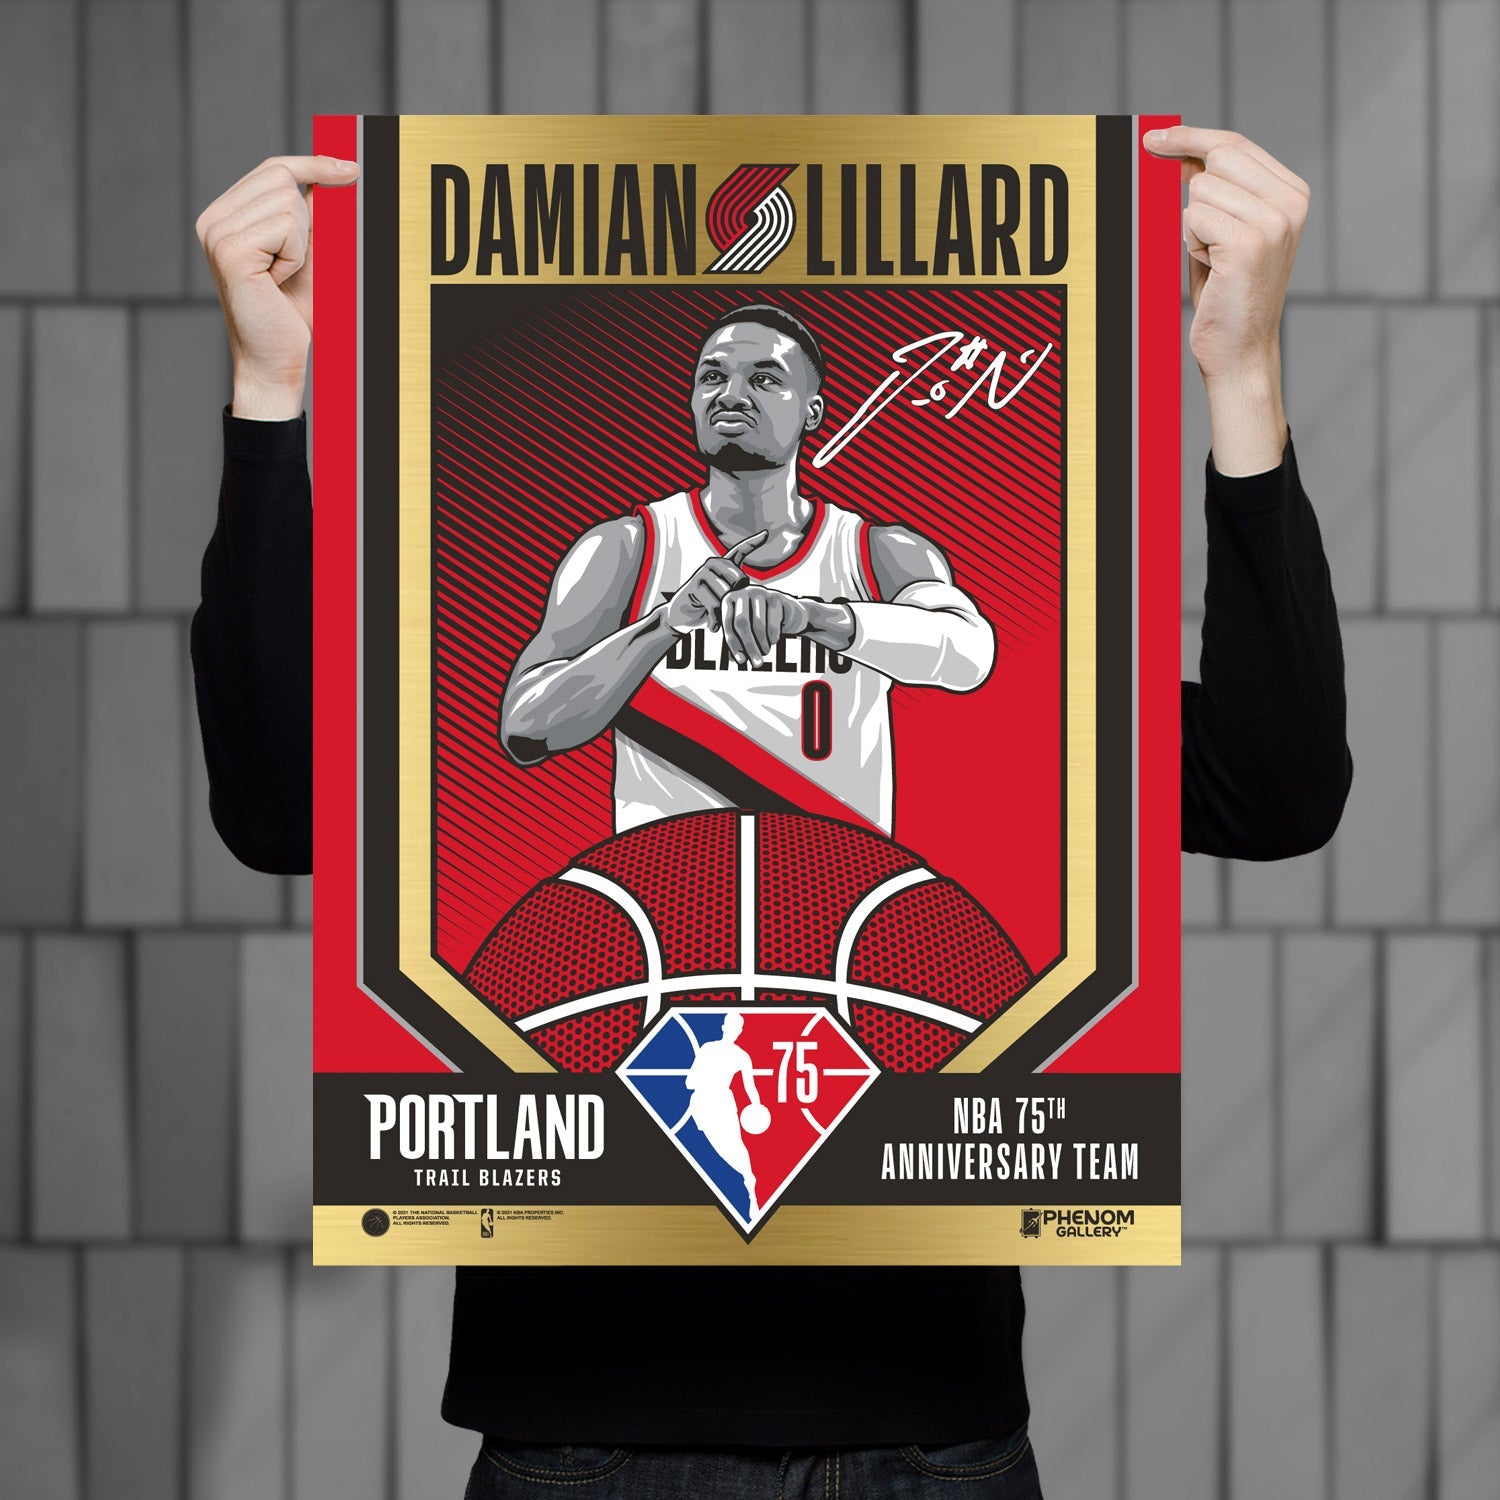 Fanatics Authentic Damian Lillard Portland Trail Blazers Framed 15'' x 17'' Franchise History All-Time Scoring Leader Collage